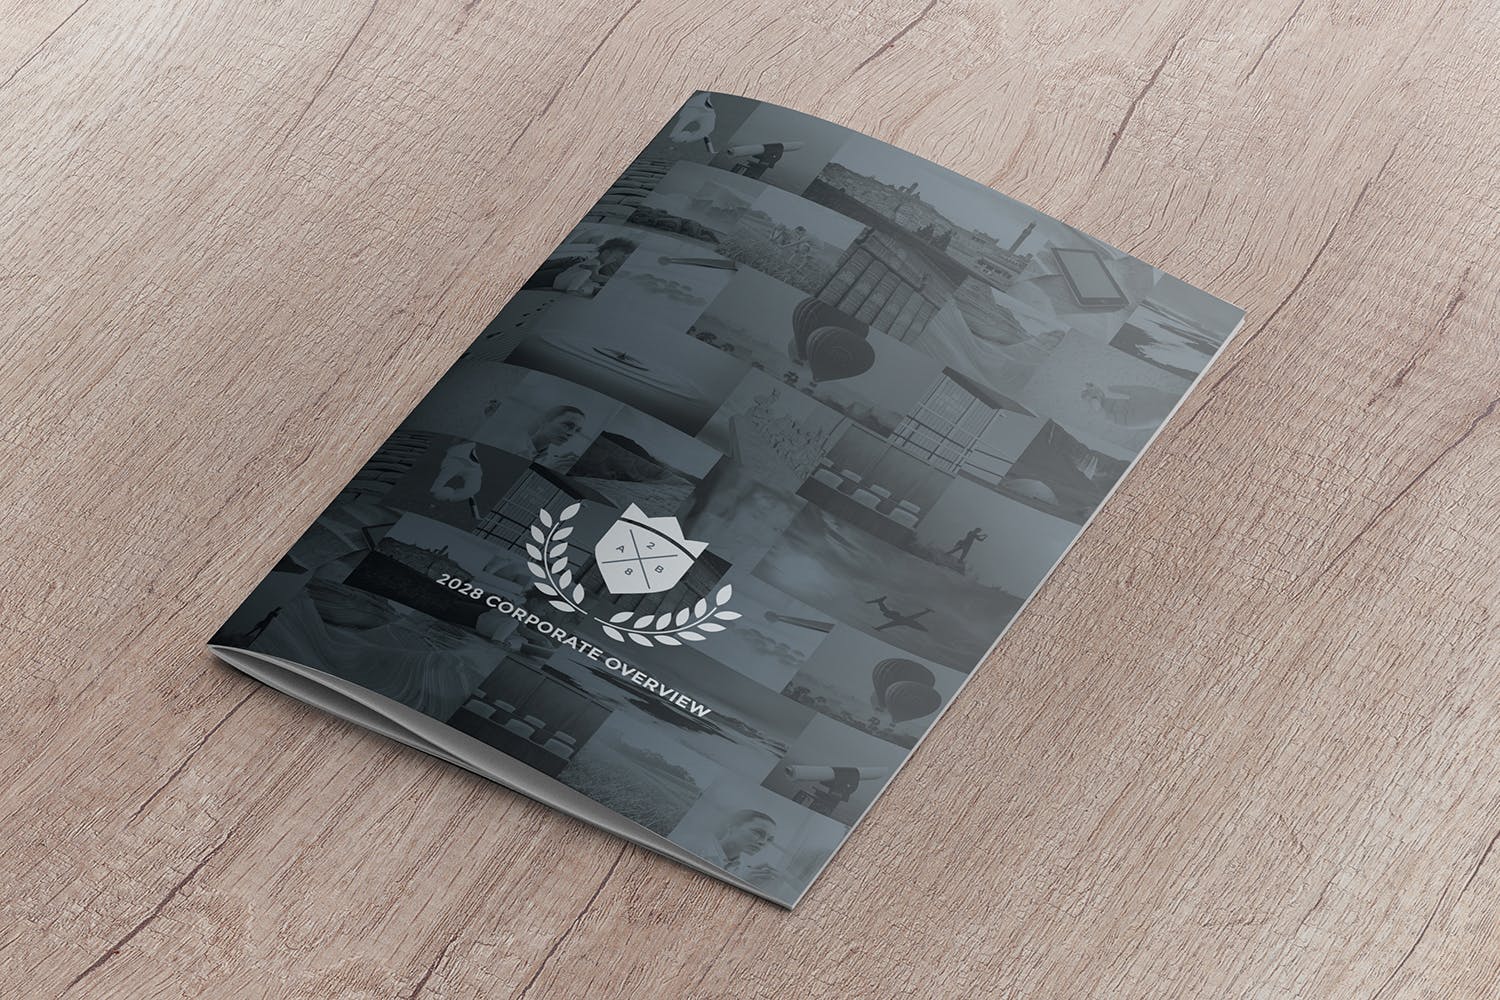 A4尺寸企业/品牌宣传册封面效果图样机16图库精选模板 A4 Brochure Cover Mockup Perspective View插图(2)